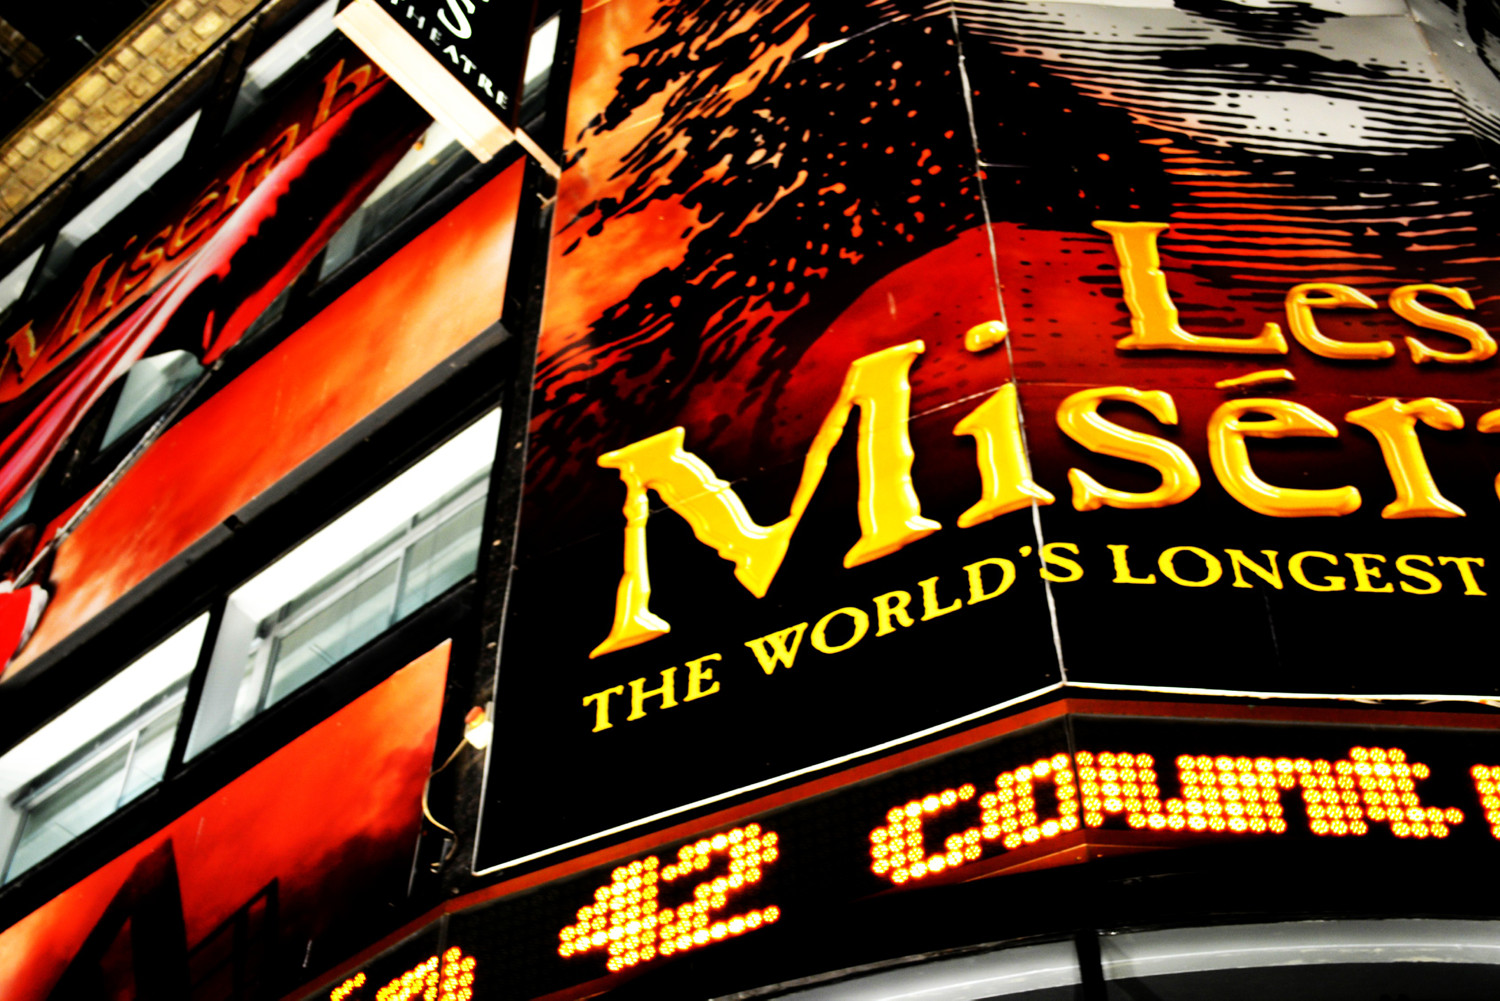 Les Misérables poster on a movie theatre billboard